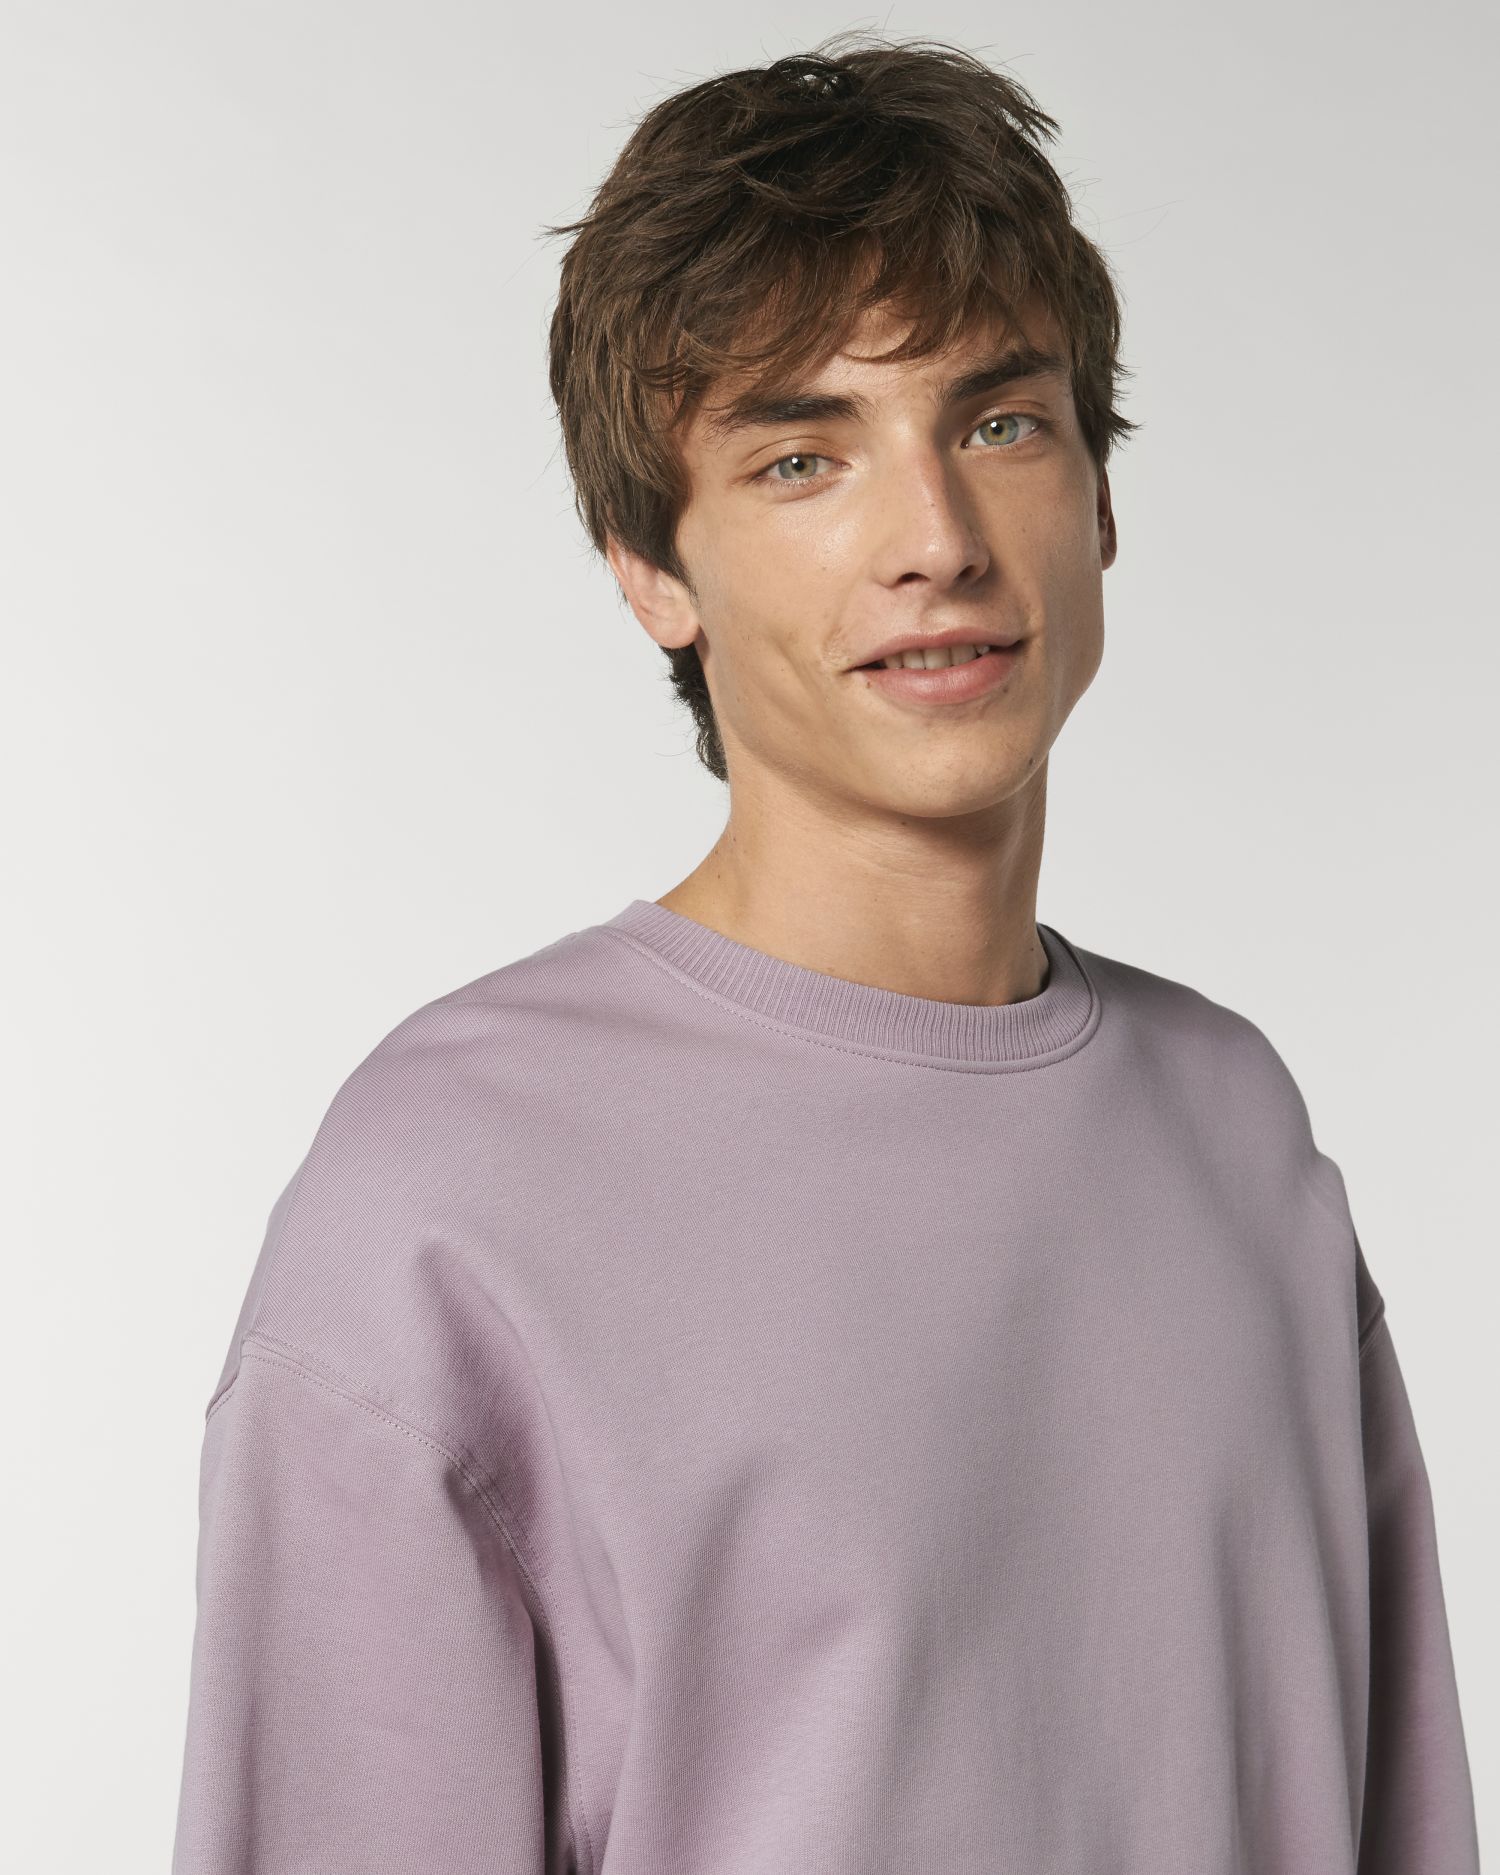 Crew neck sweatshirts Radder in Farbe Lilac Petal